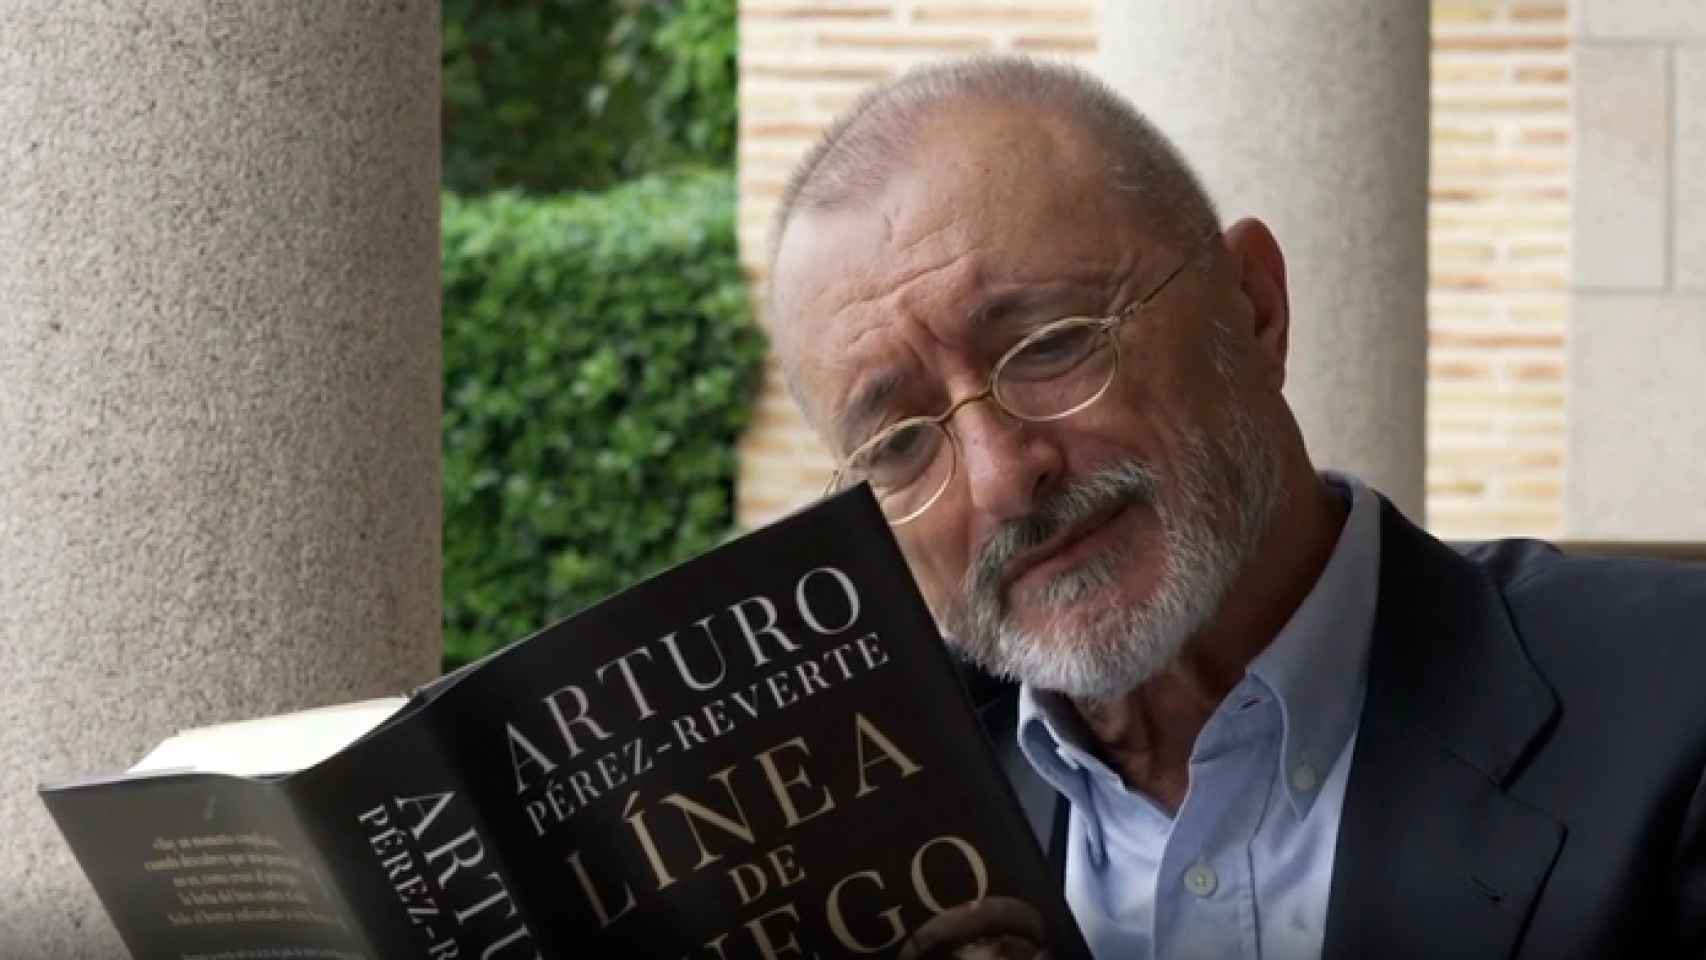 Los resúmenes de los libros de Arturo Pérez-Reverte < Tu Novela